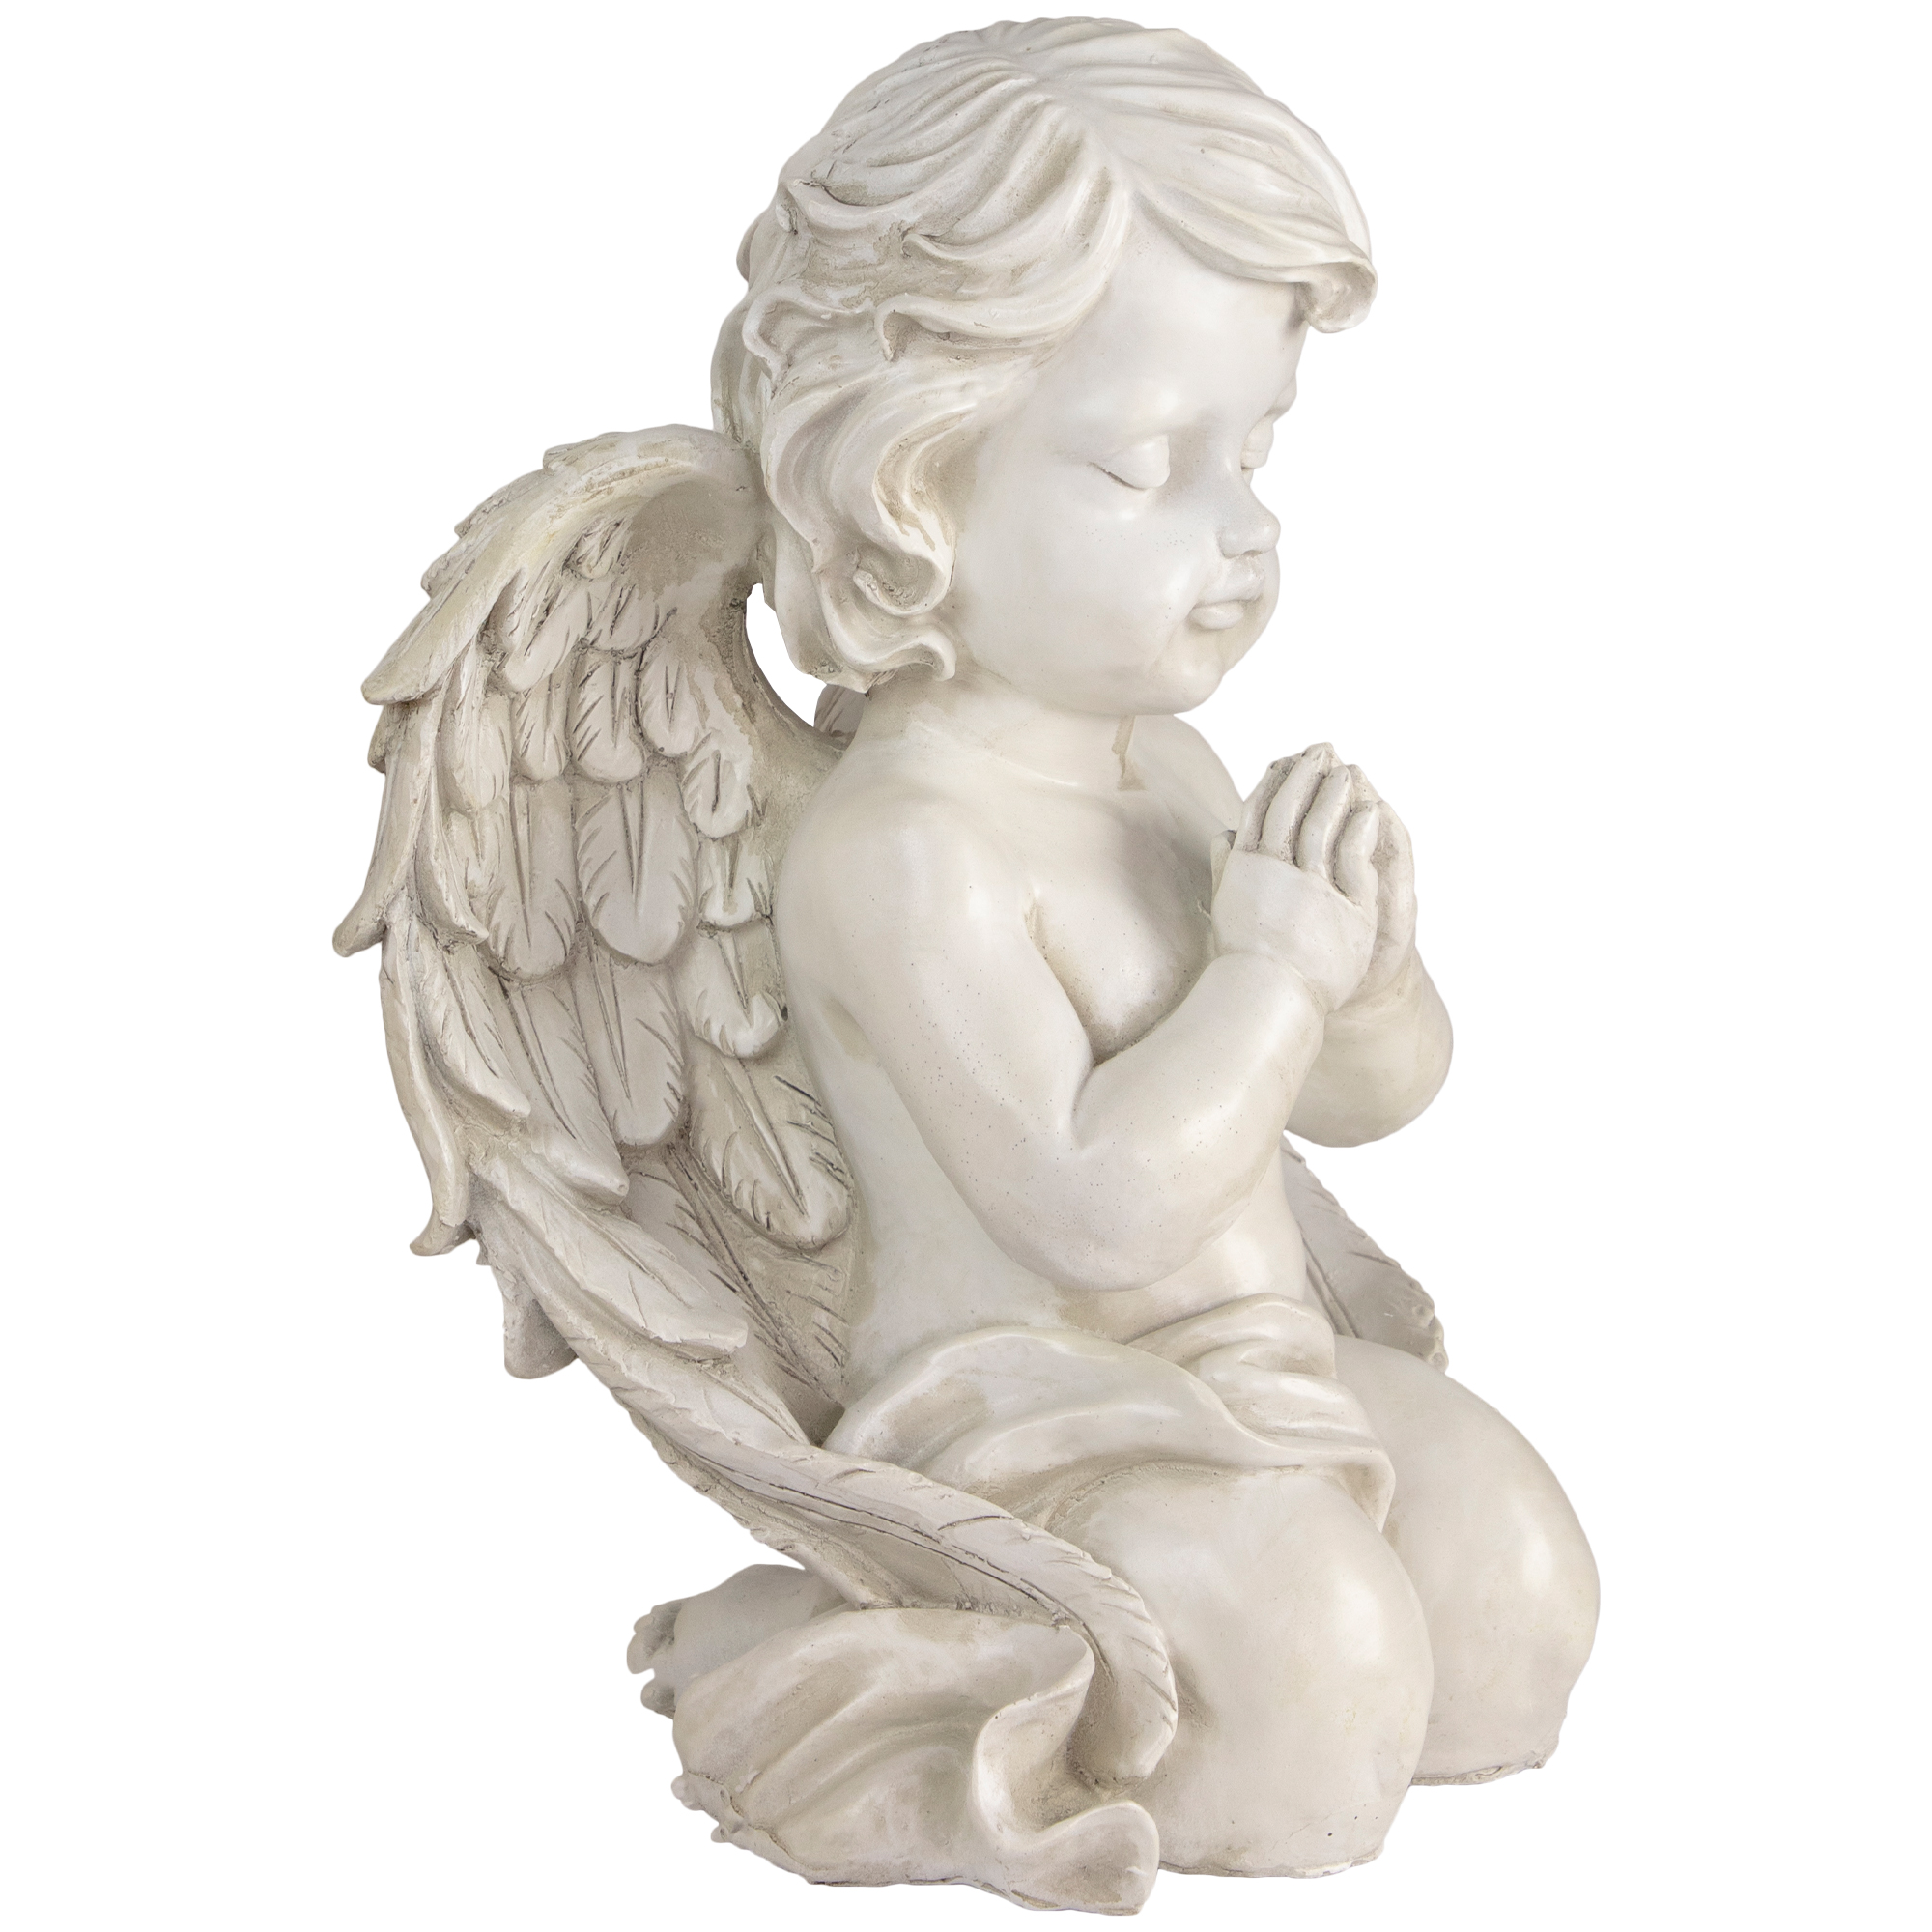 Northlight 13.5" Kneeling Praying Cherub Angel Religious Outdoor Patio Garden Statue - Gray - image 3 of 5